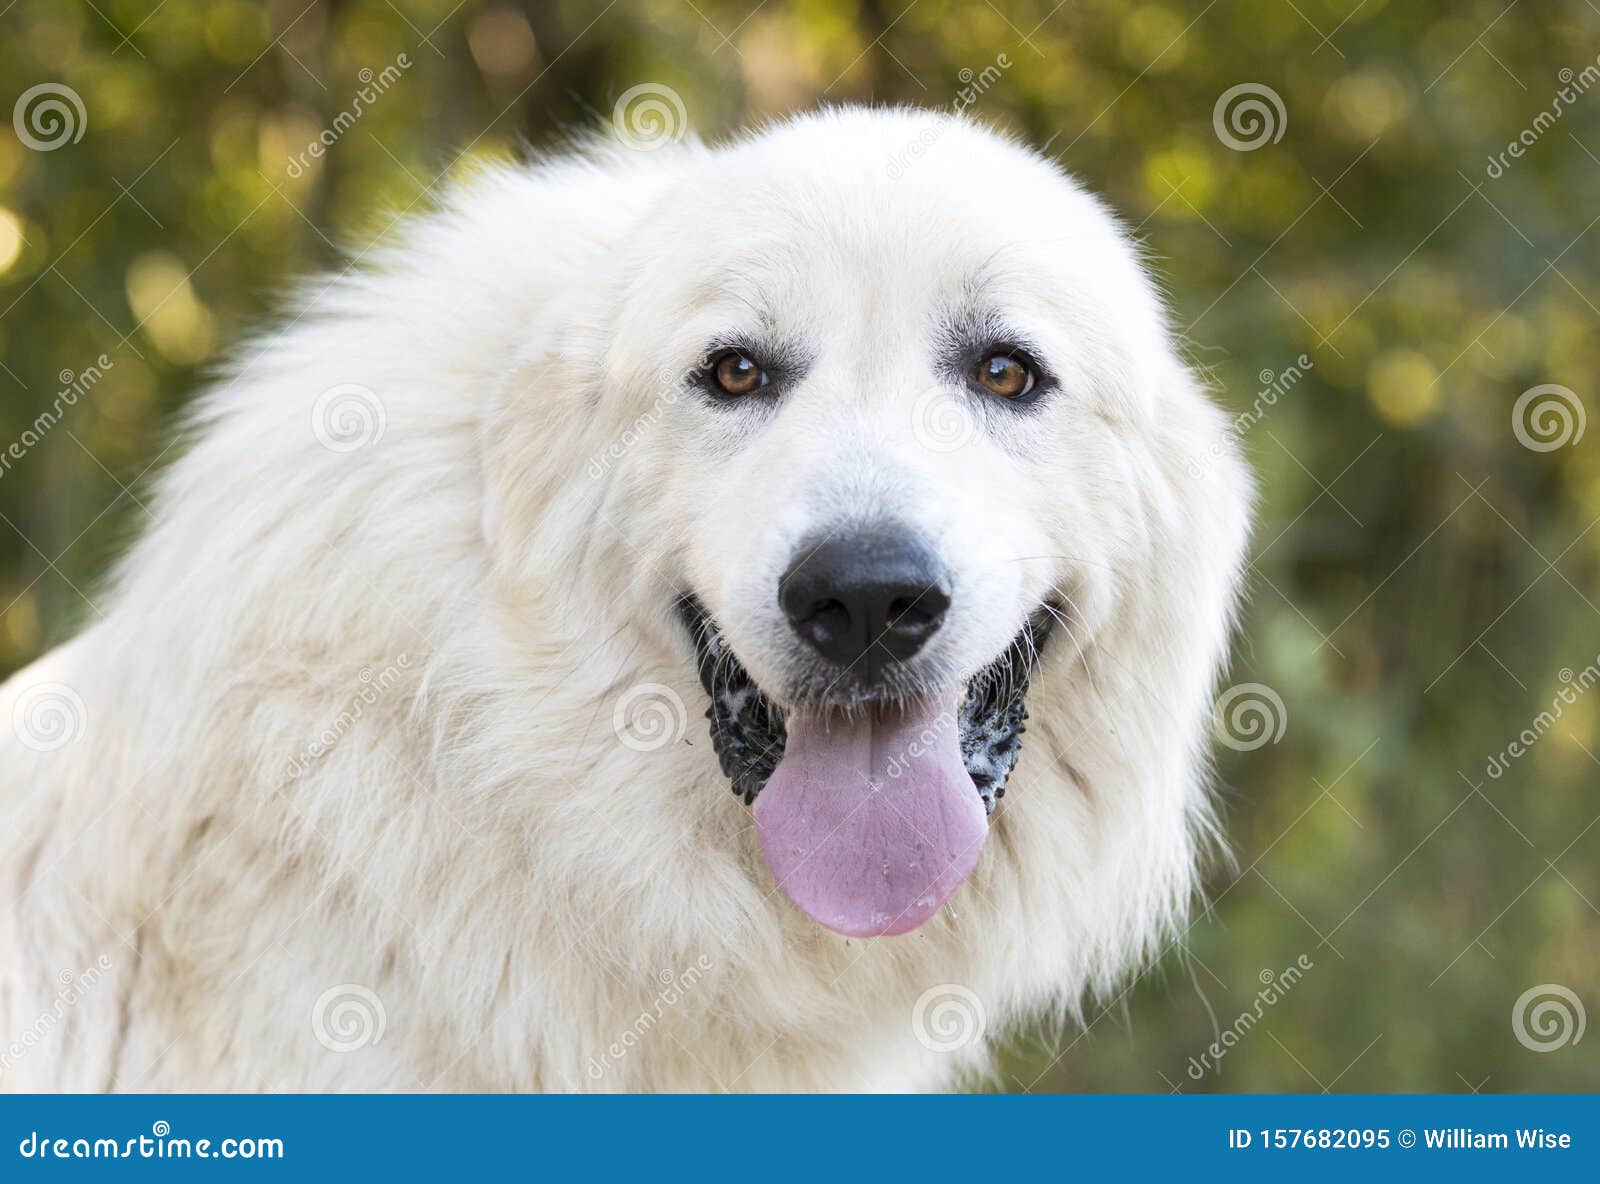 Large Fluffy White Long Hair Great Pyrenees Dog Panting Stock Image - Image  of mountain, laying: 157682095